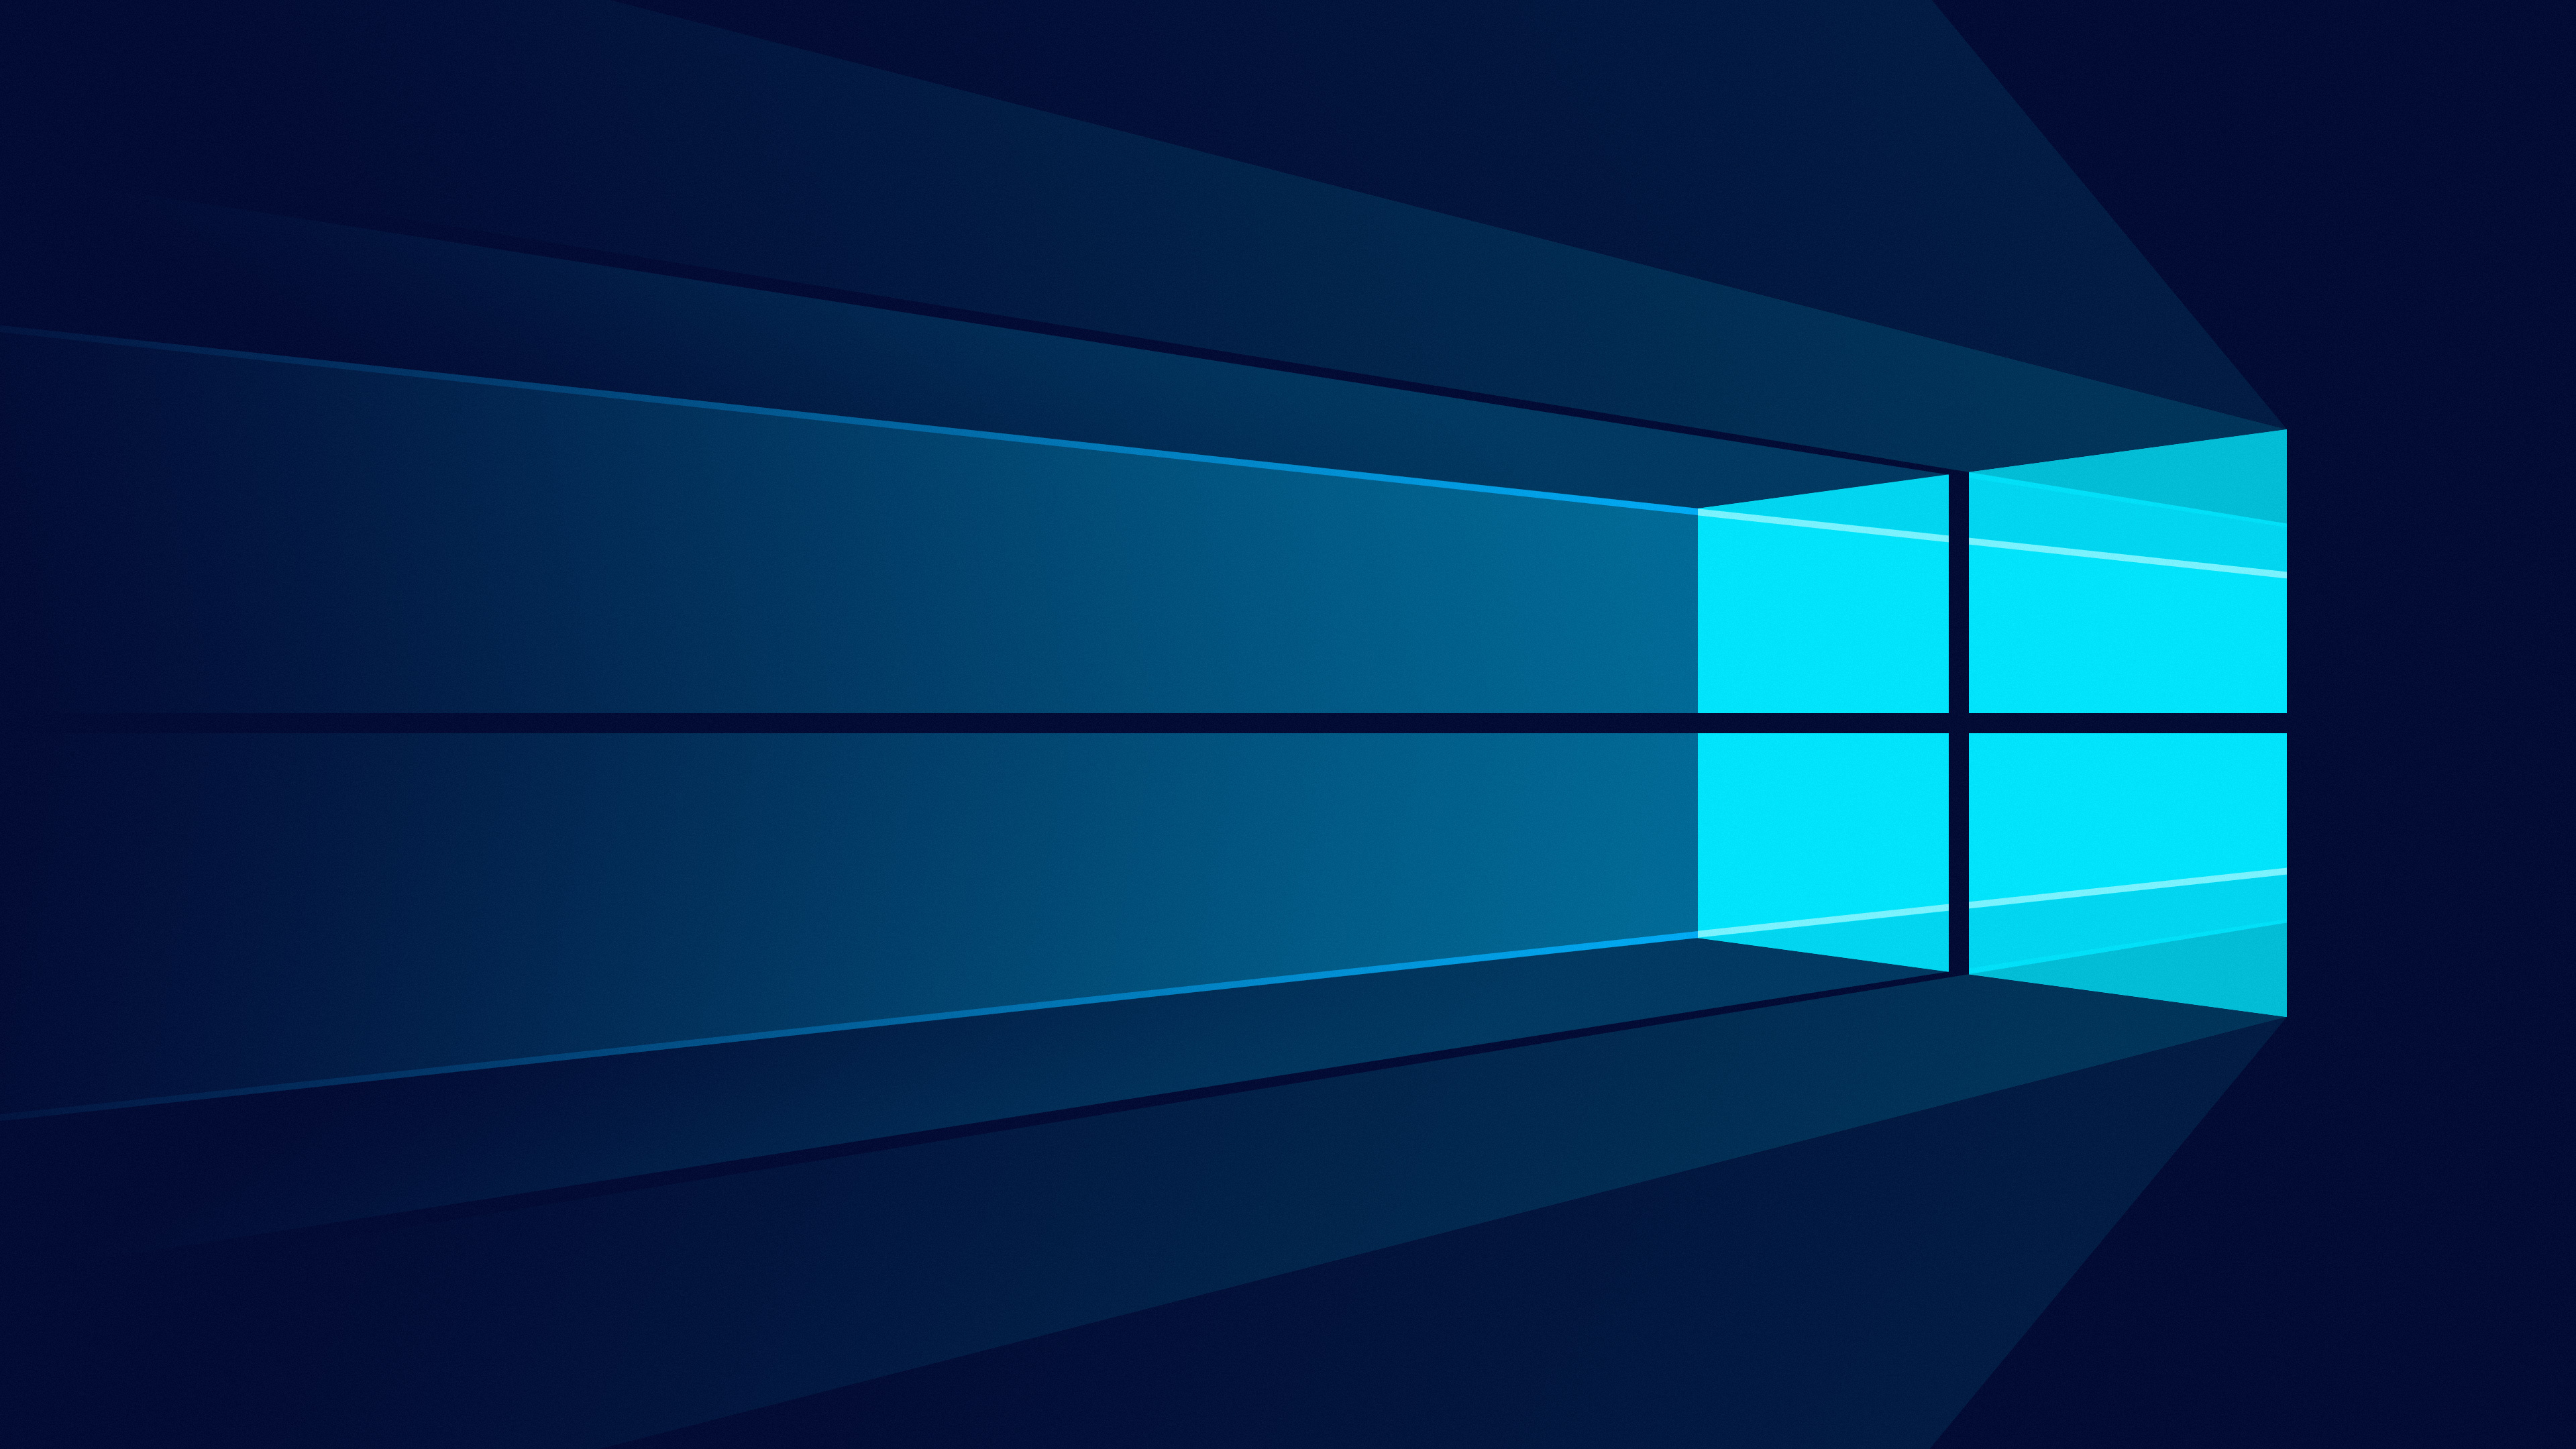 Microsoft: Windows 10, Minimalist, Blue, Technology, Steve Ballmer, Bill Gates. 3840x2160 4K Wallpaper.